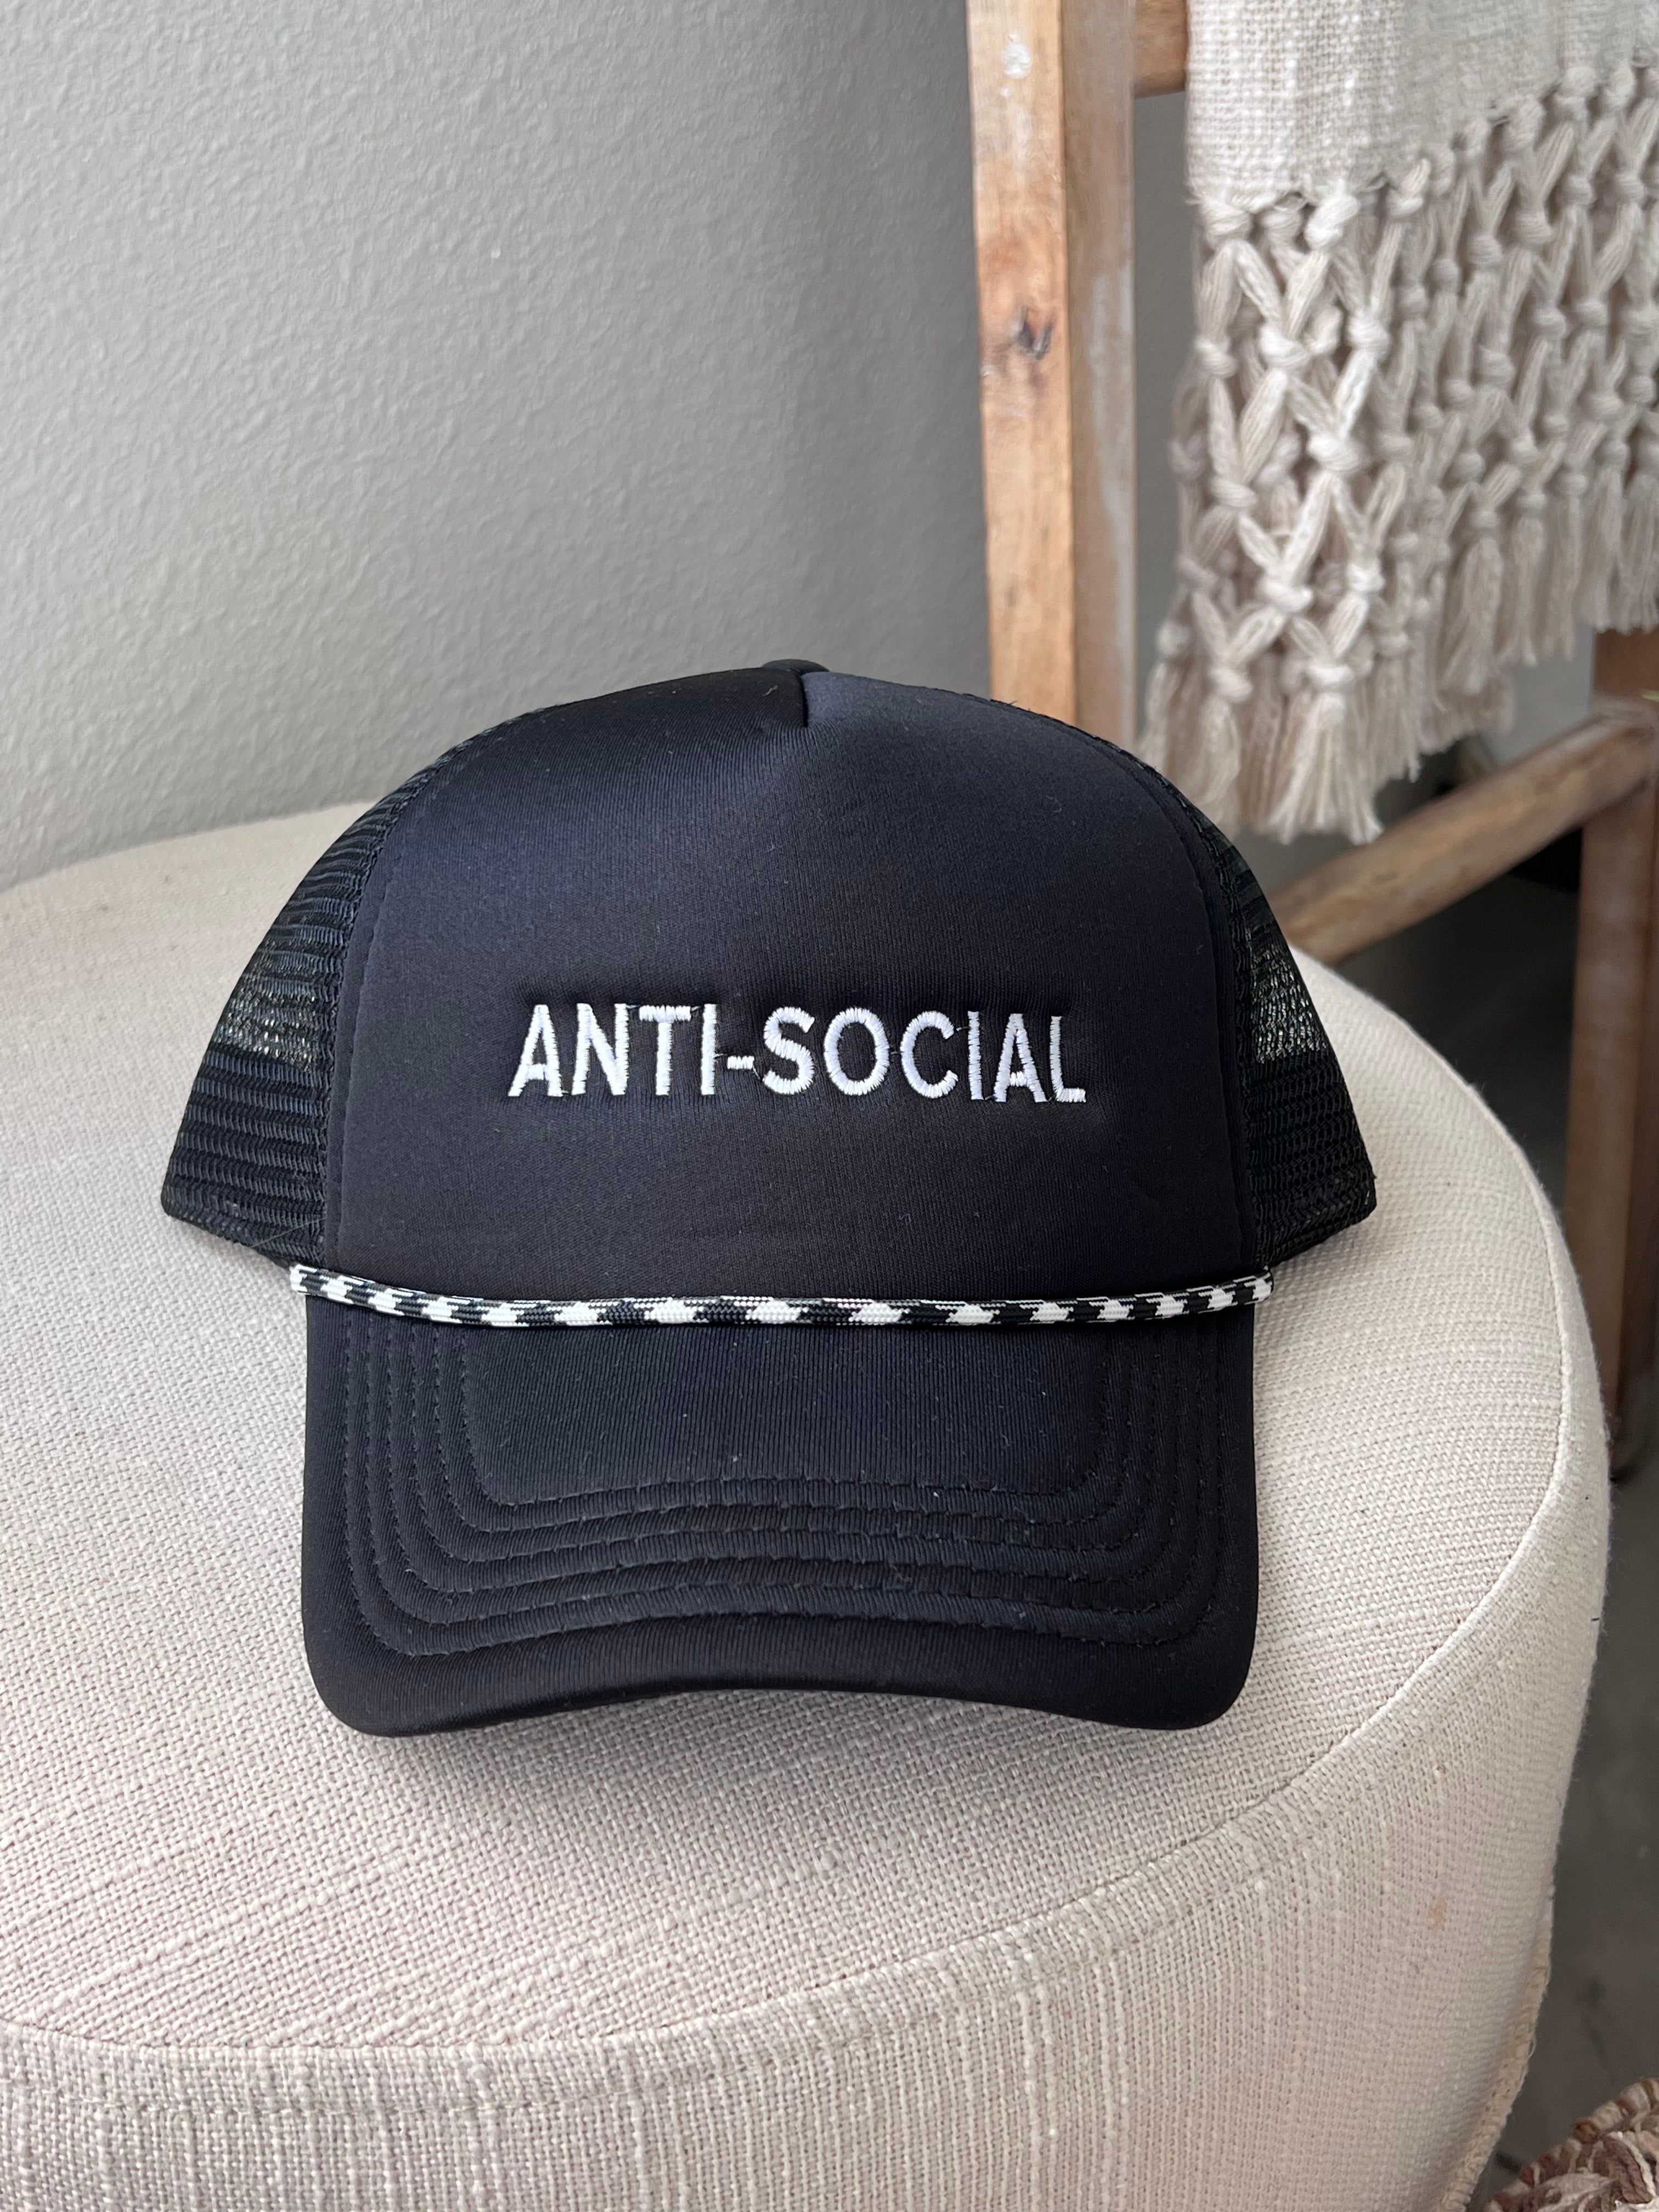 image of Anti-Social Trucker Hat